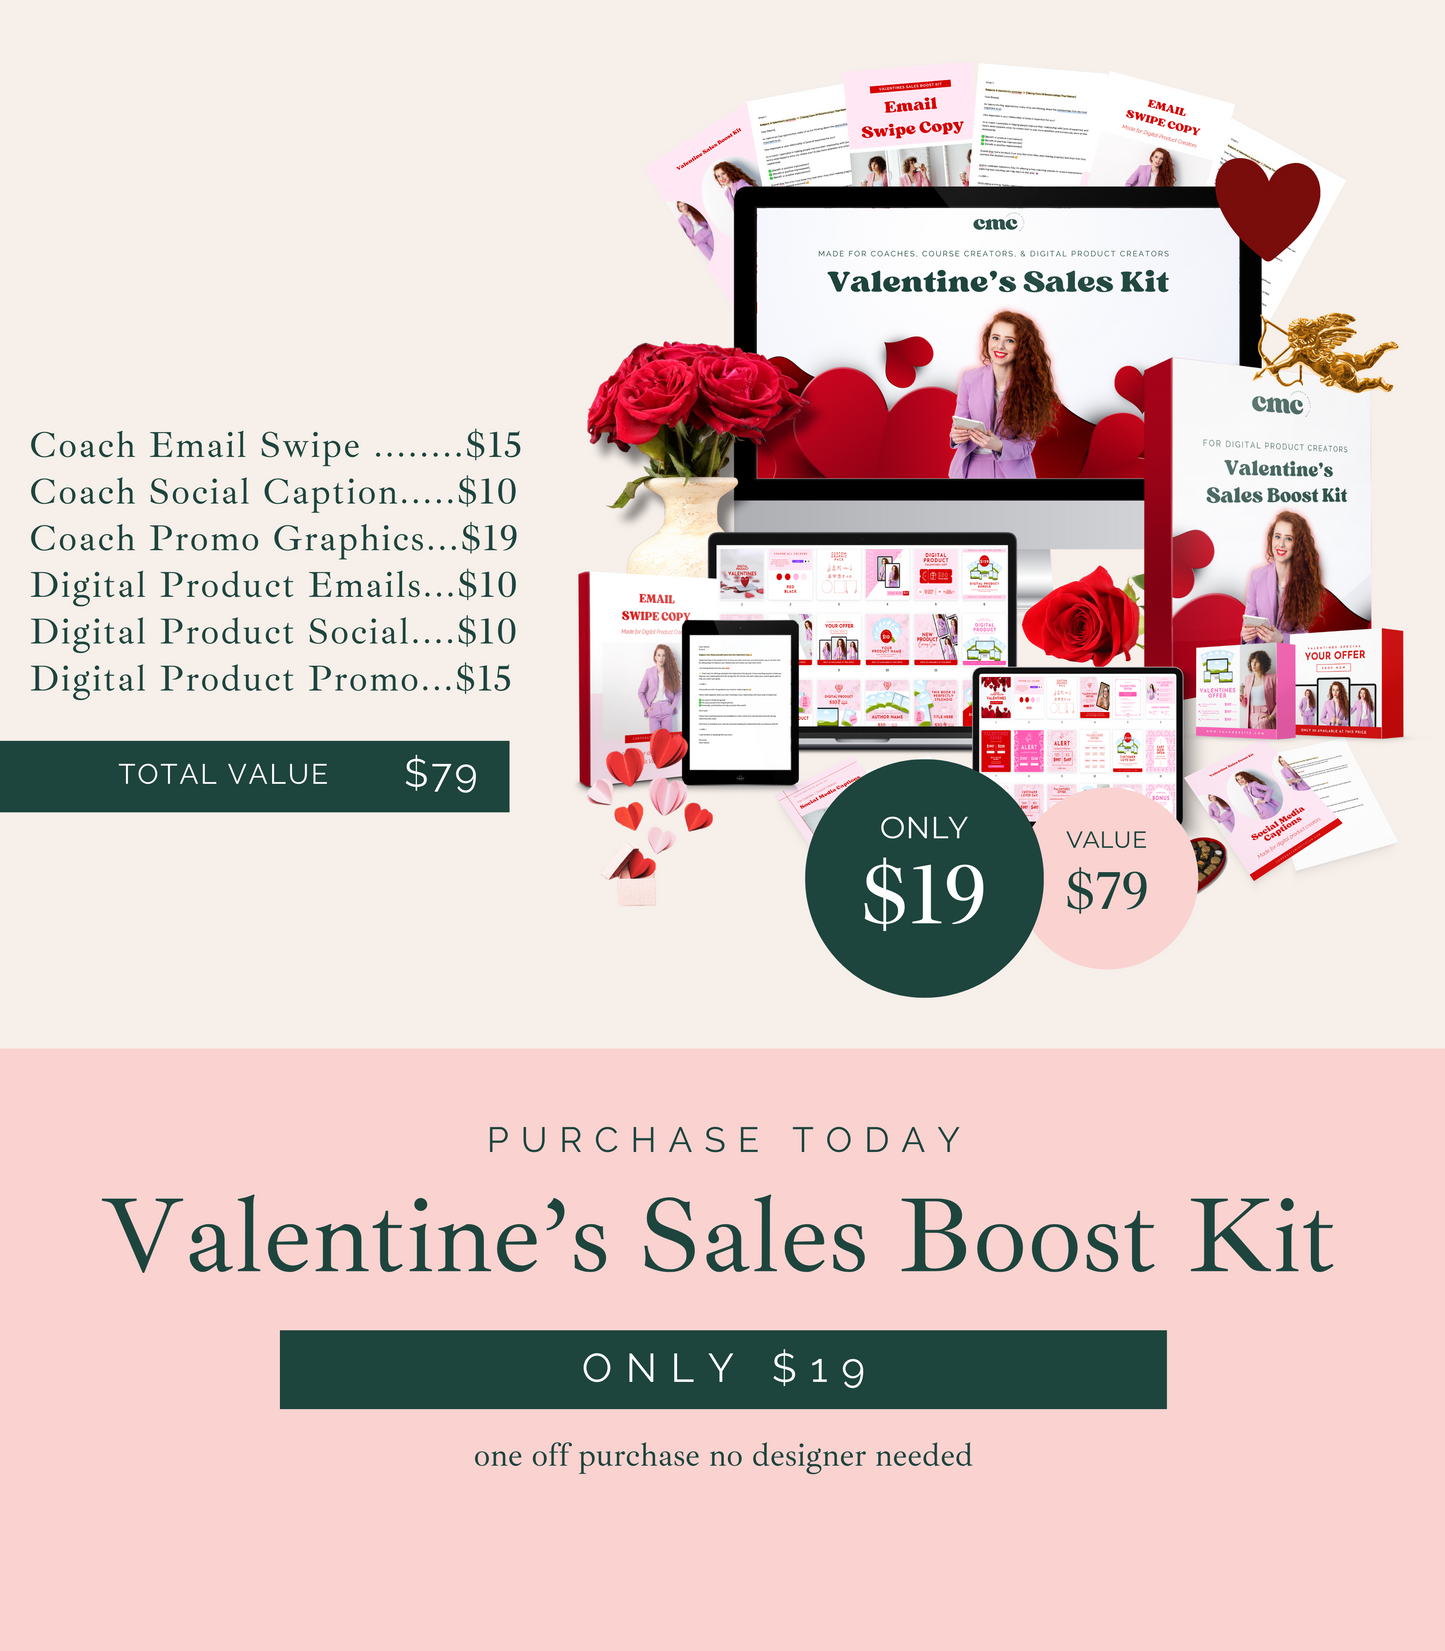 Valentine's Sales Boost Kit